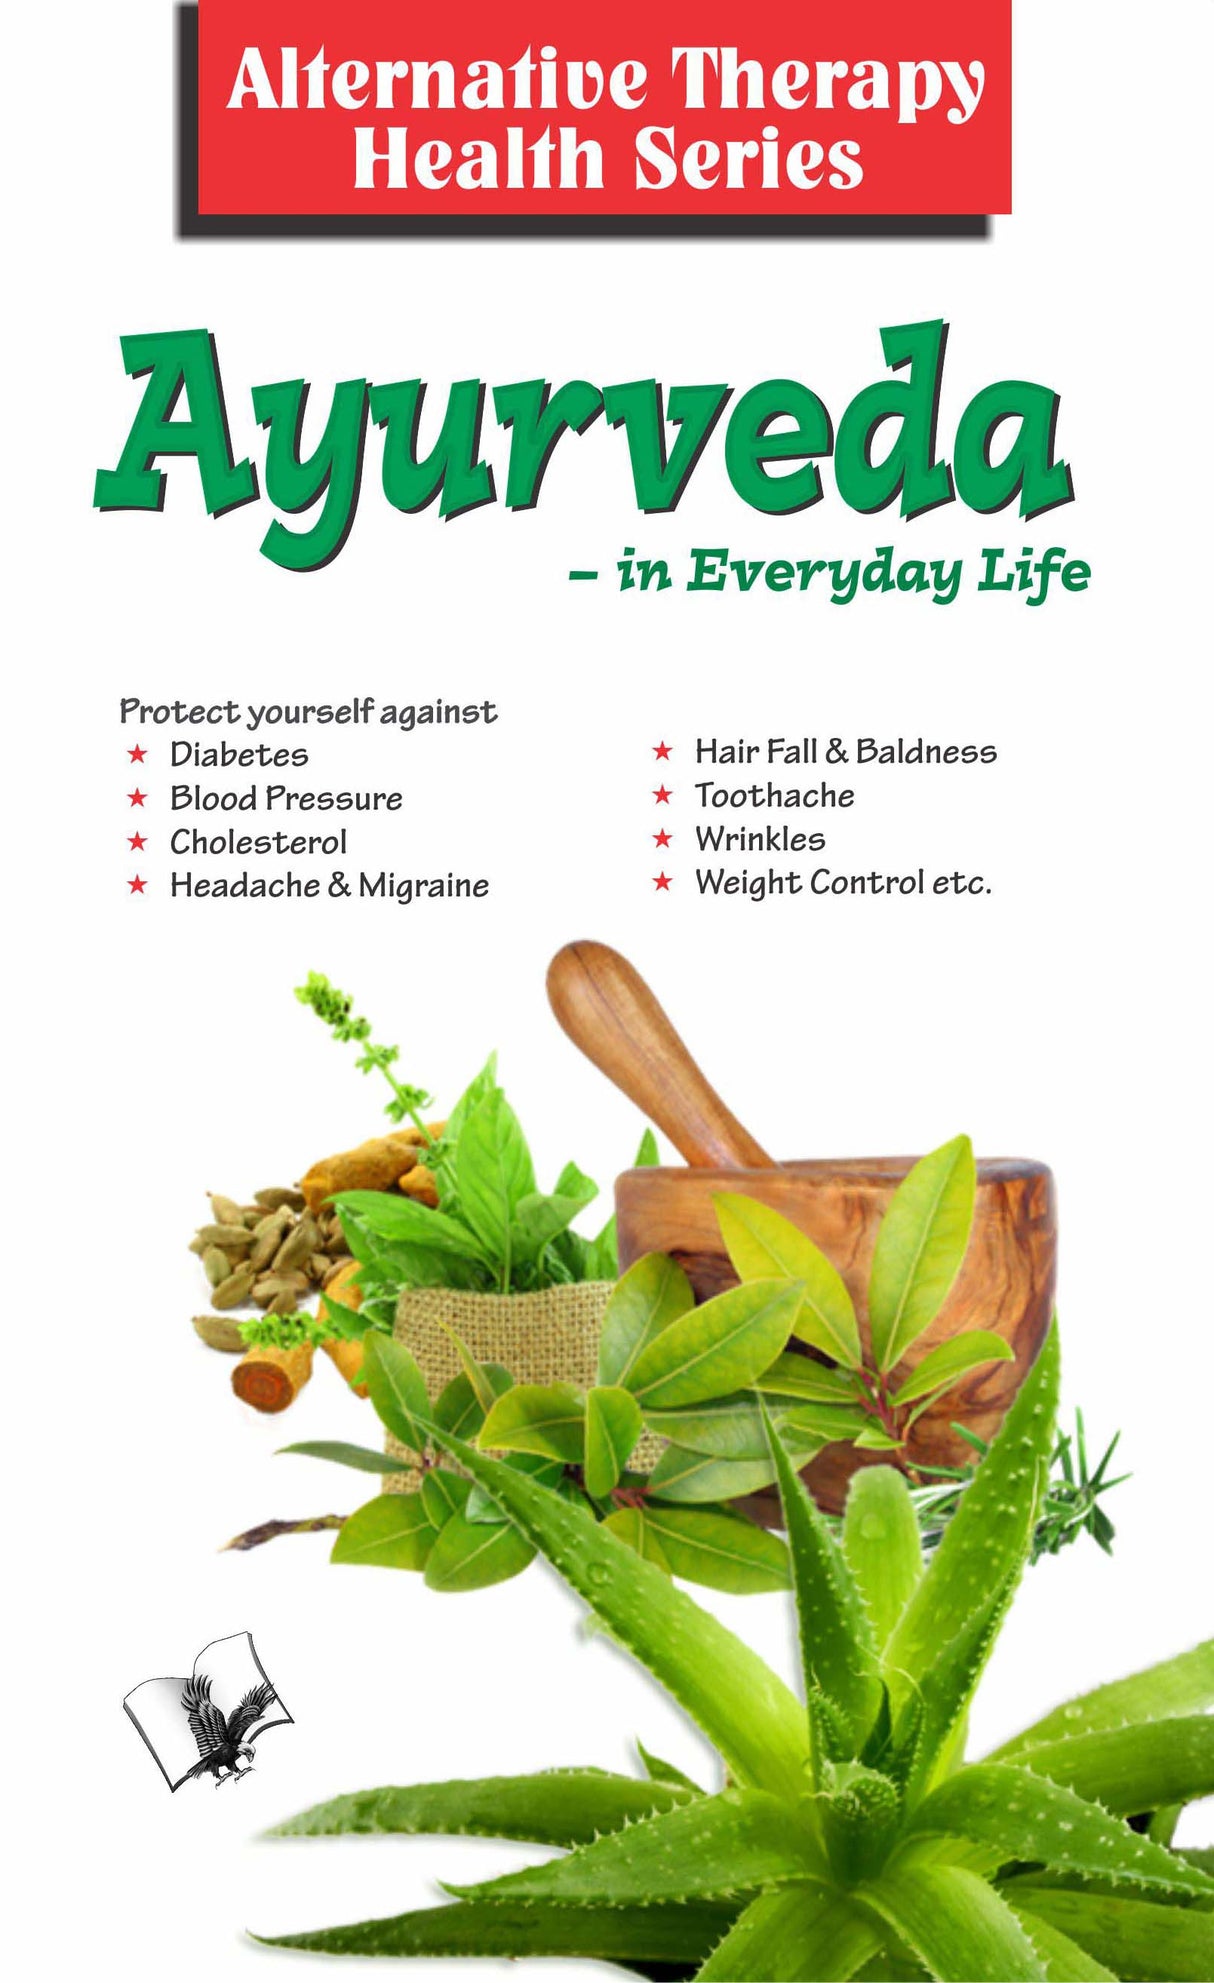 Ayurveda: Ayurvedic Remedies For Acidity, Acne, Asthma, Cholesterol, Diabetes, Headache, BP, Obesity, etc.